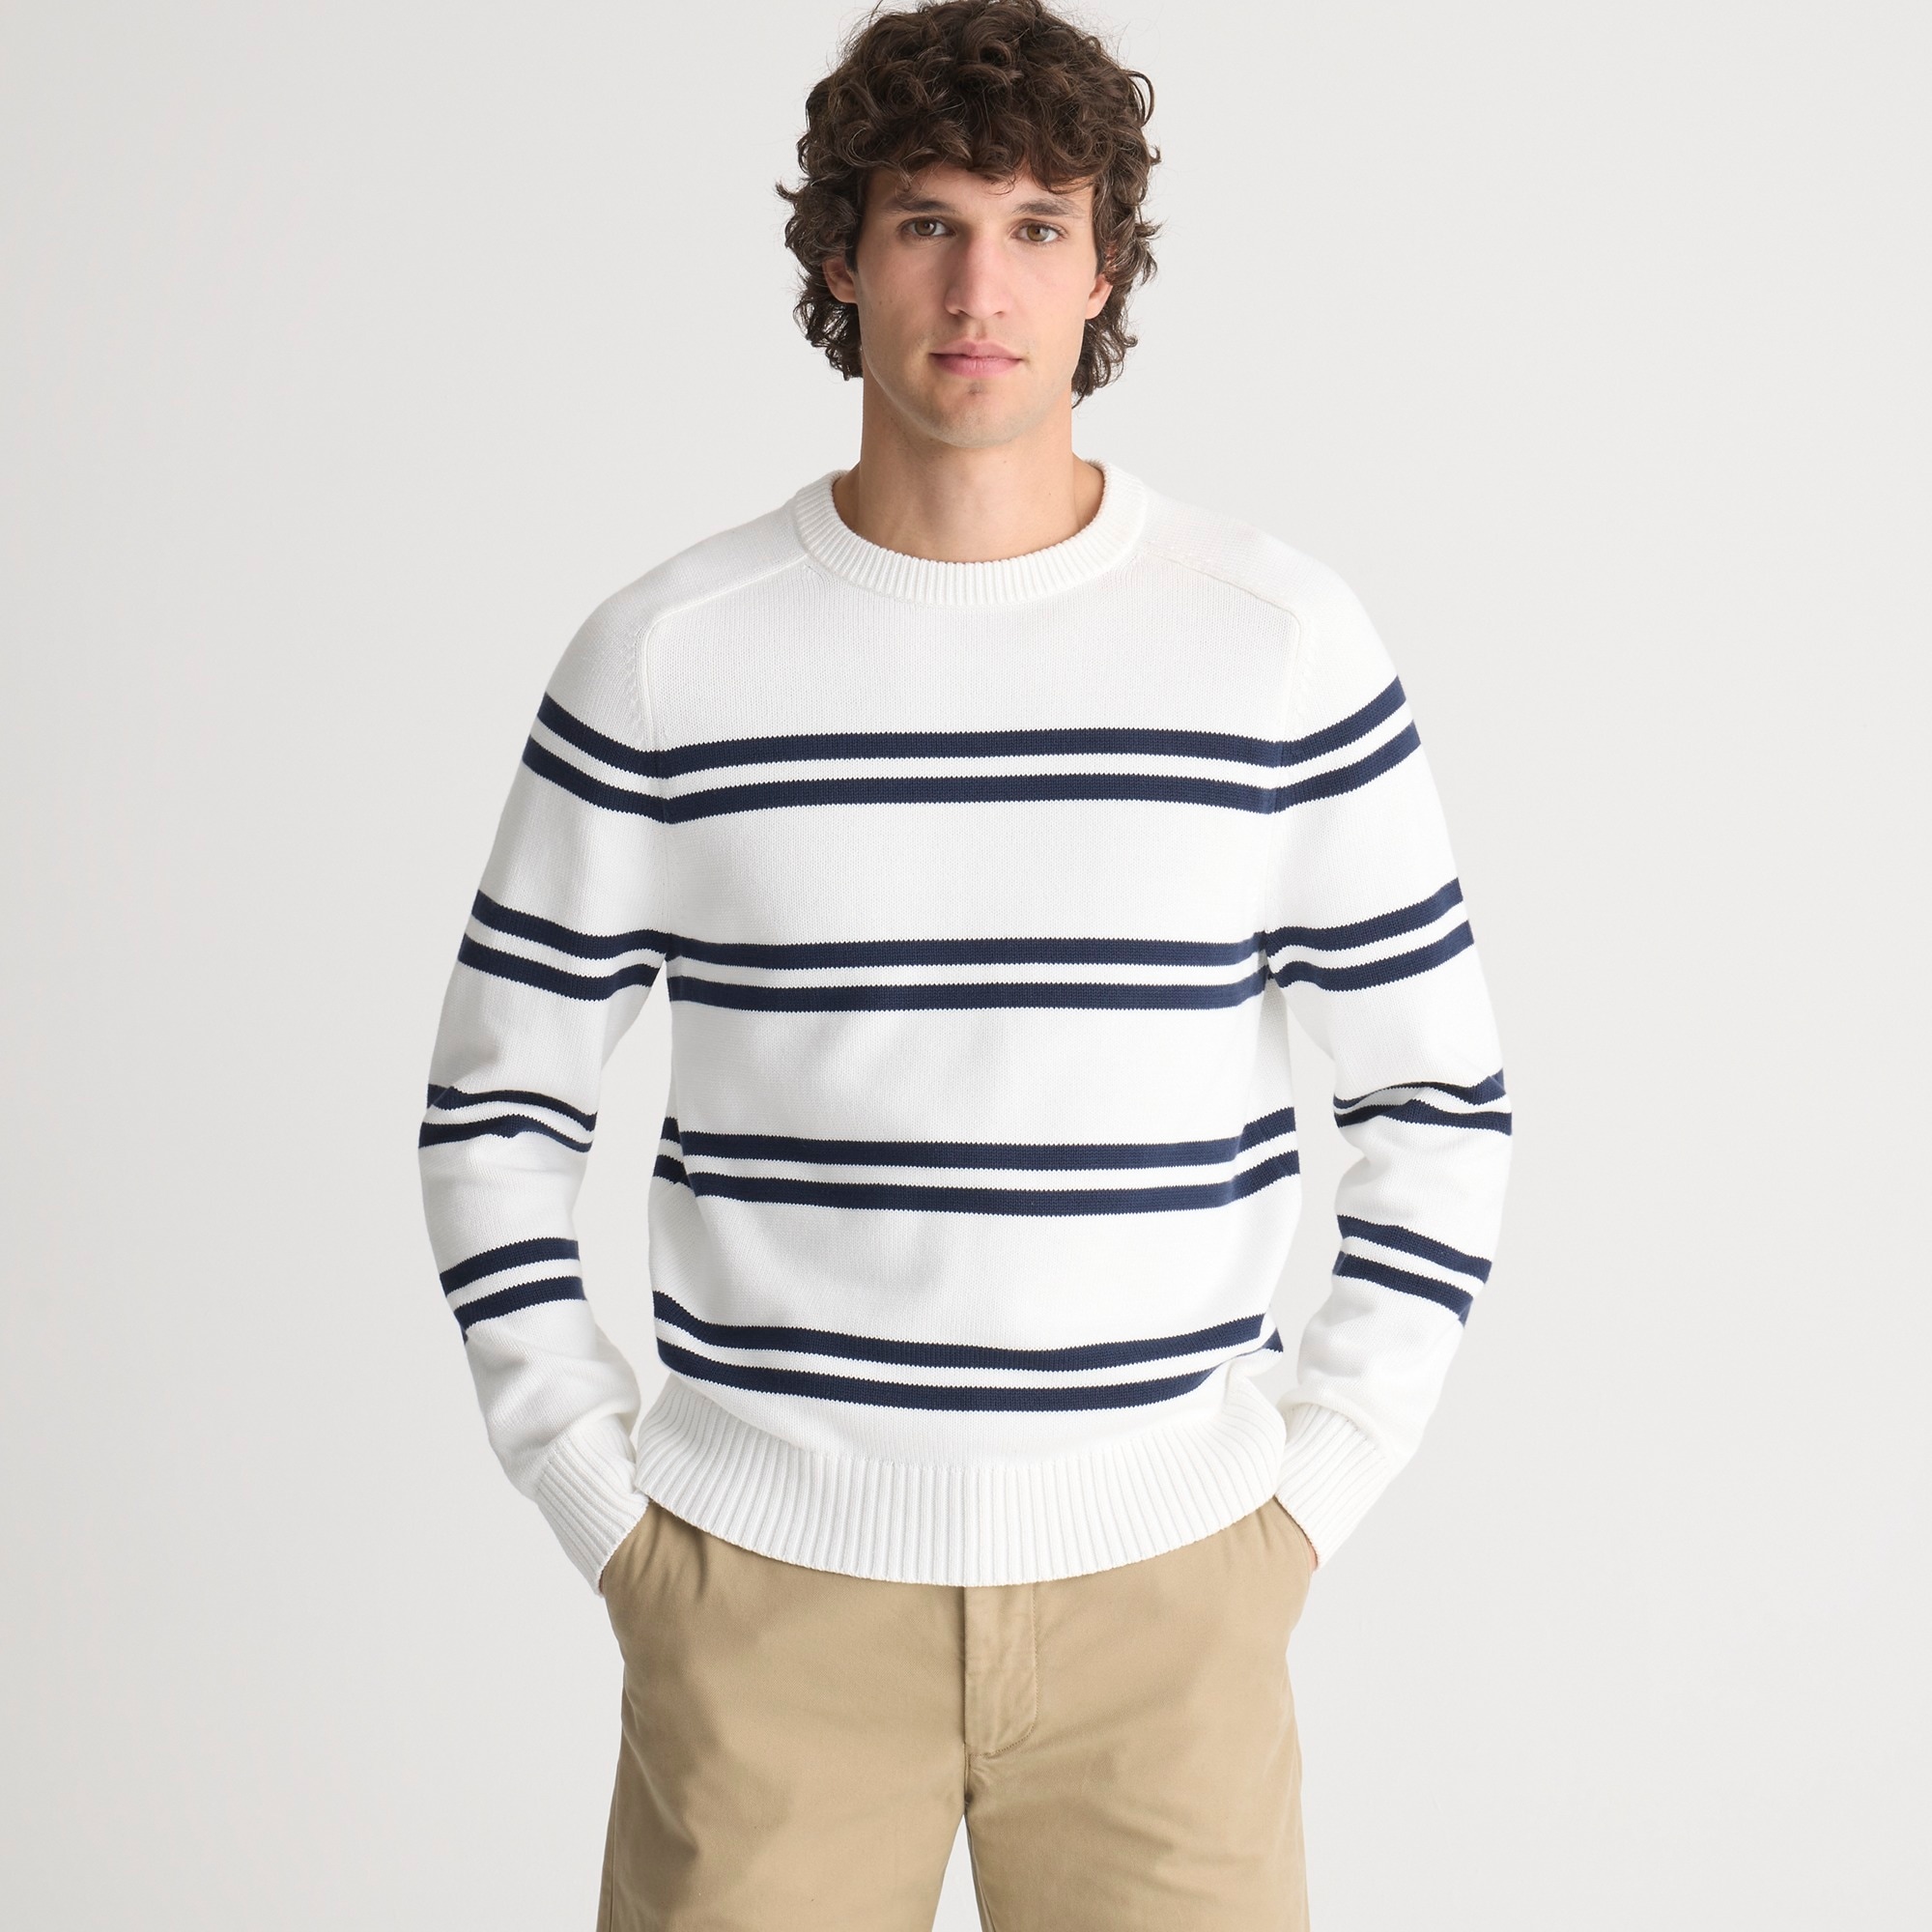 Jcrew Heritage cotton crewneck sweater